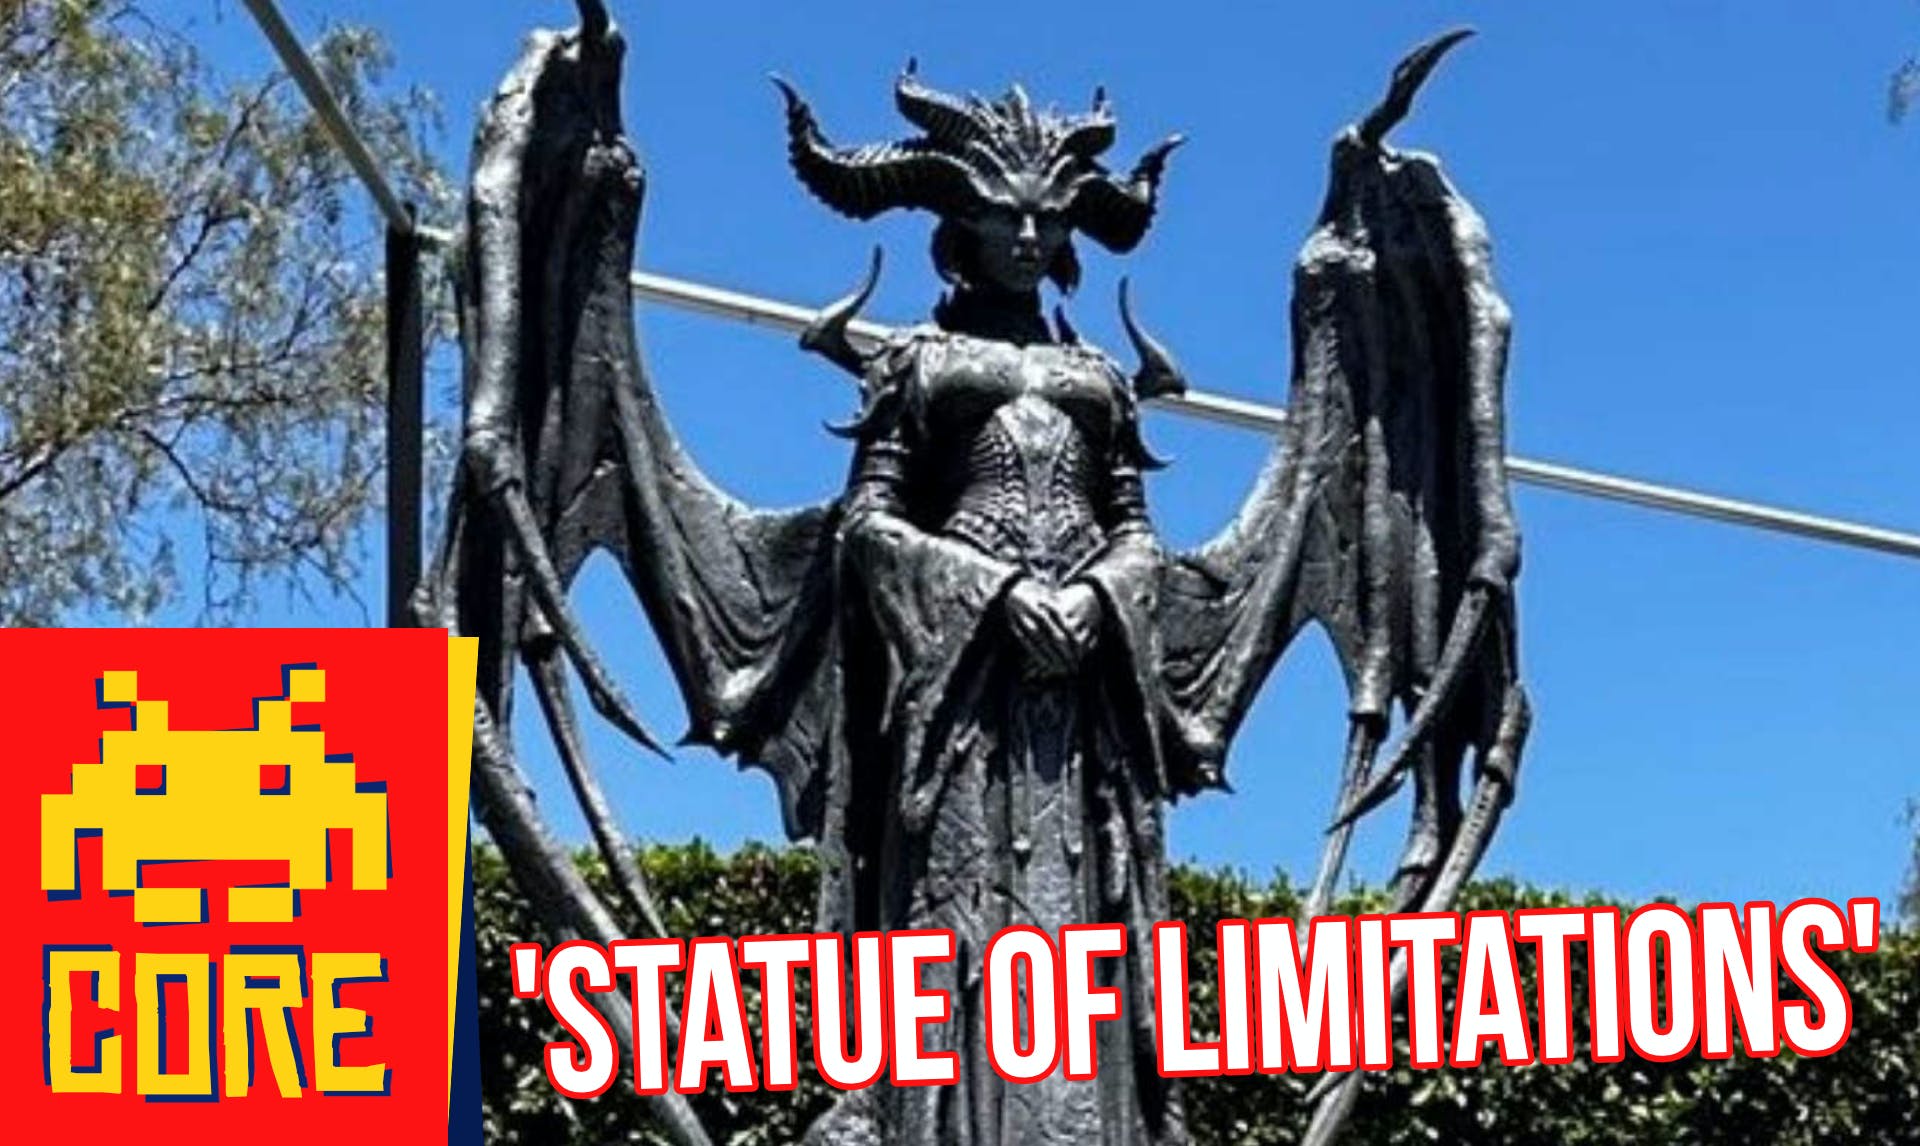 CORE 373: Statue of Limitations